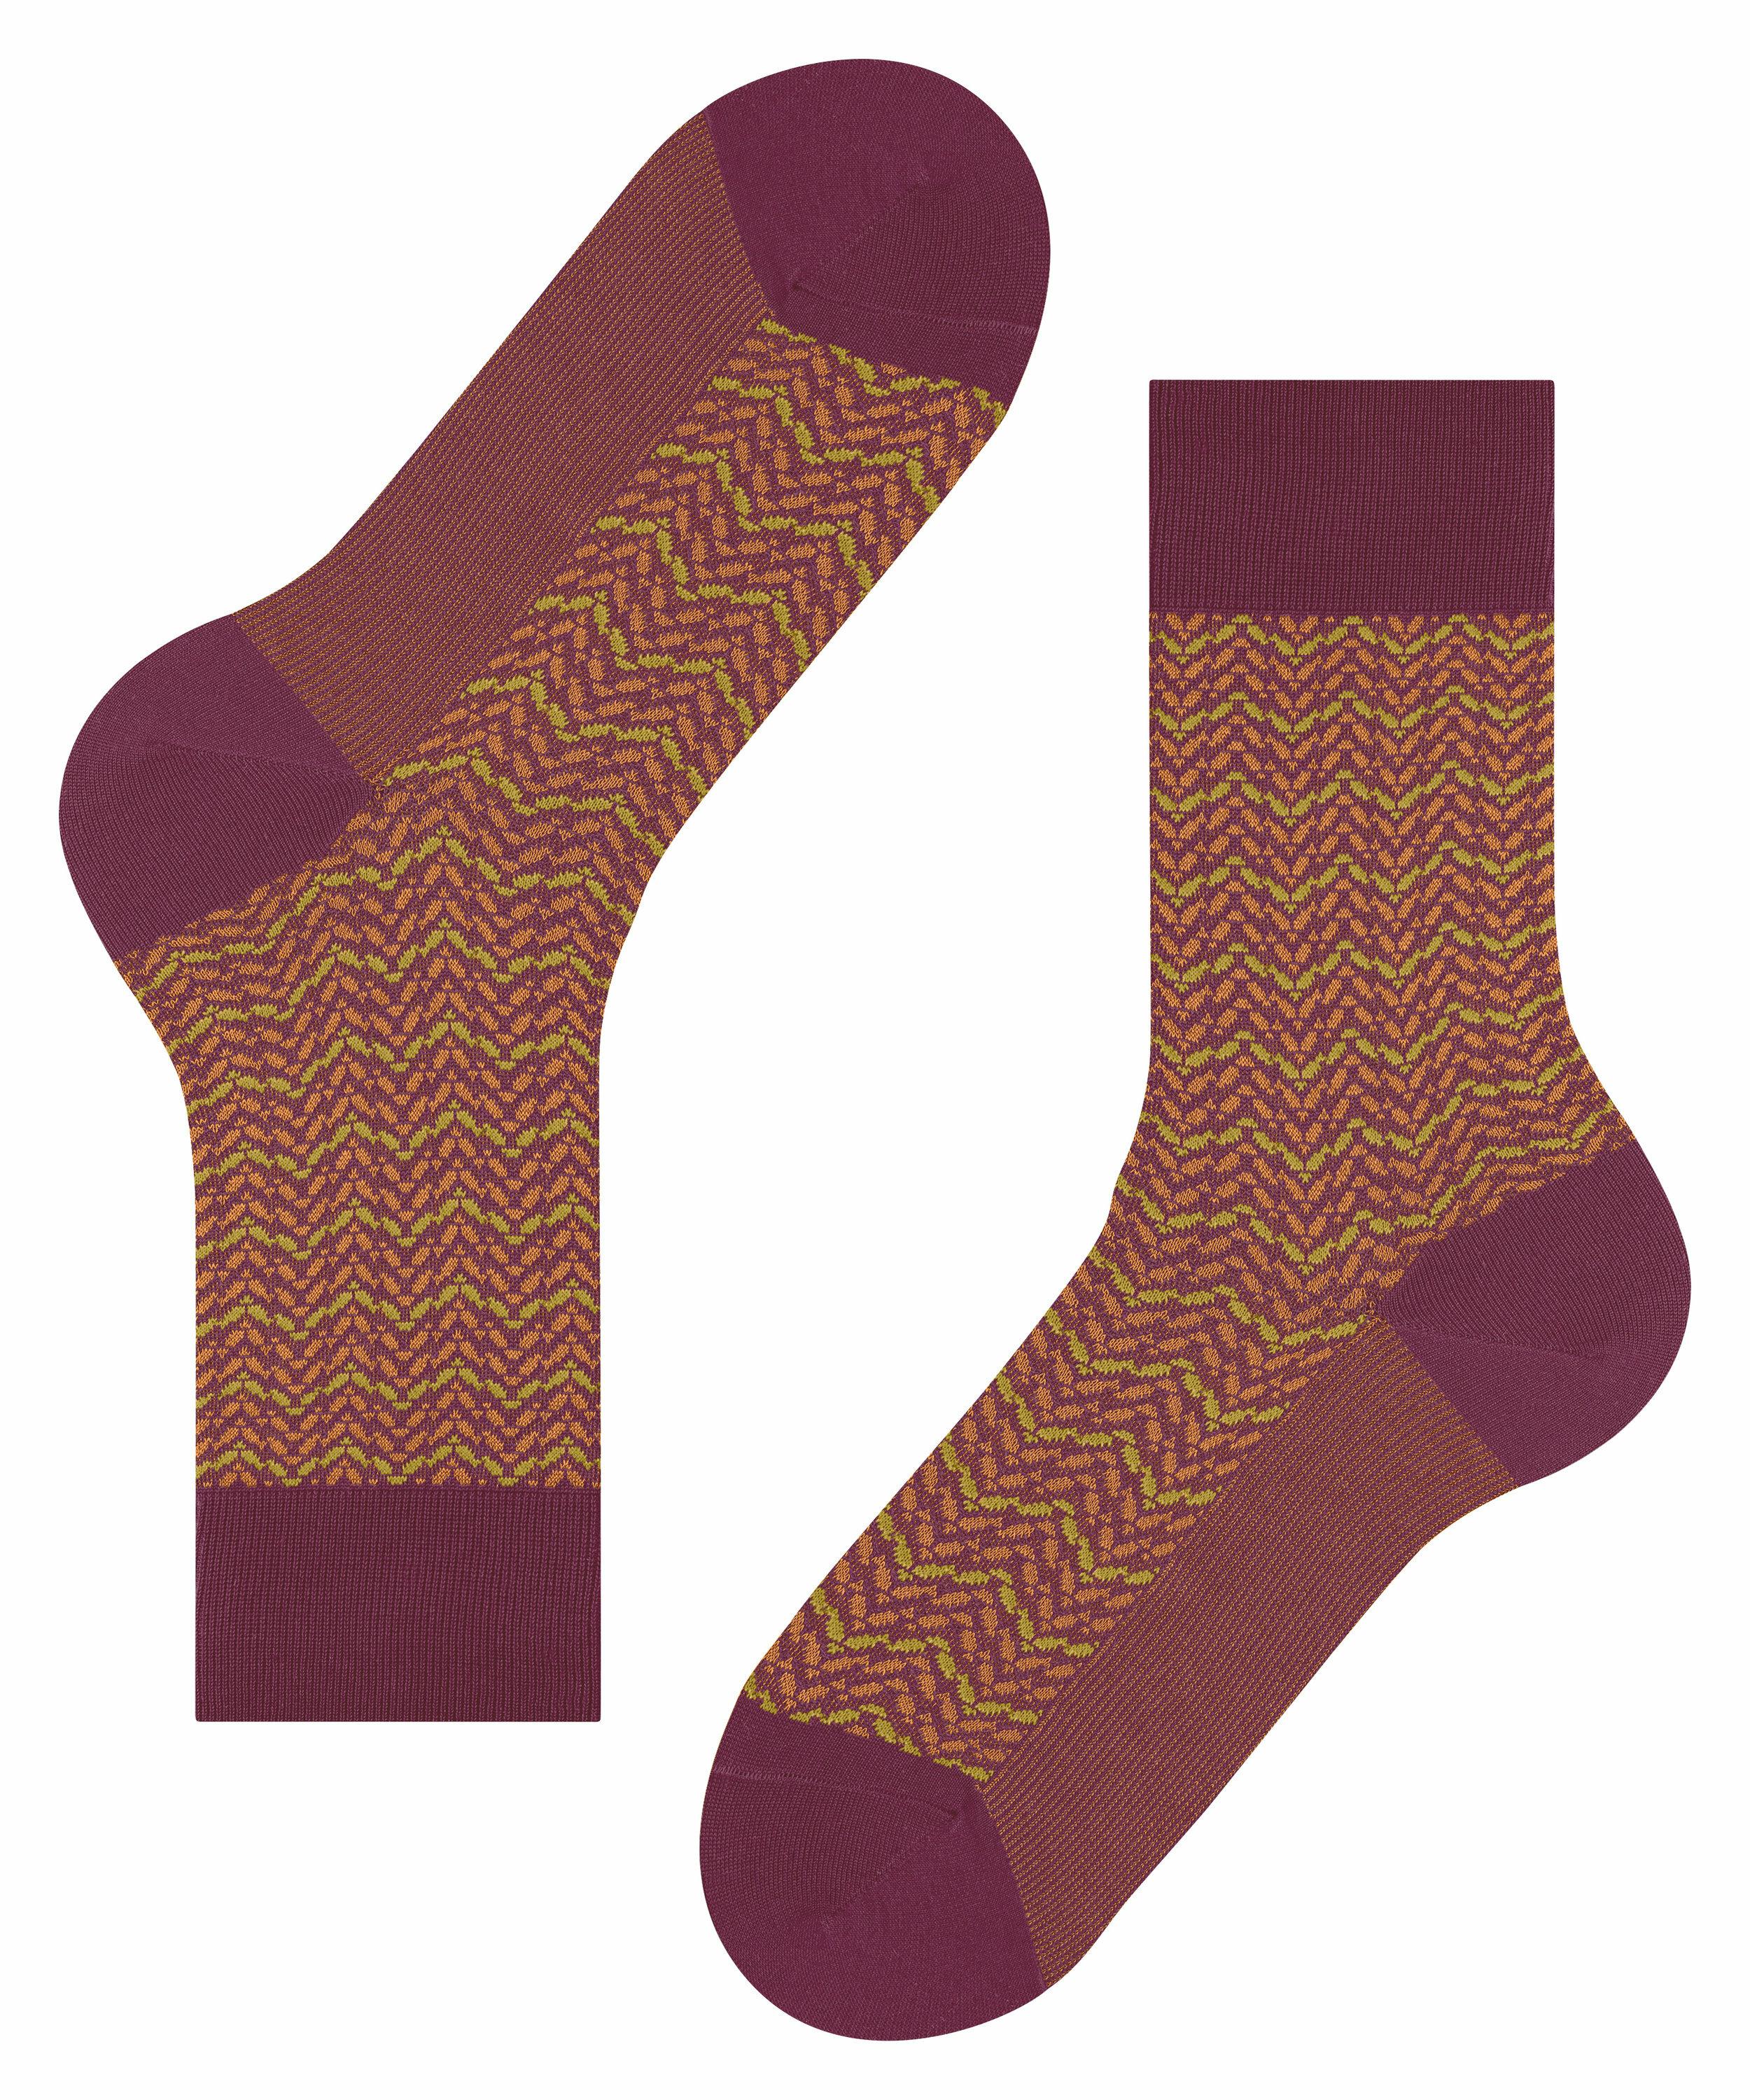 FALKE Colour Waves Herren Socken, 41-42, Lila, AnderesMuster, Baumwolle, 12 günstig online kaufen